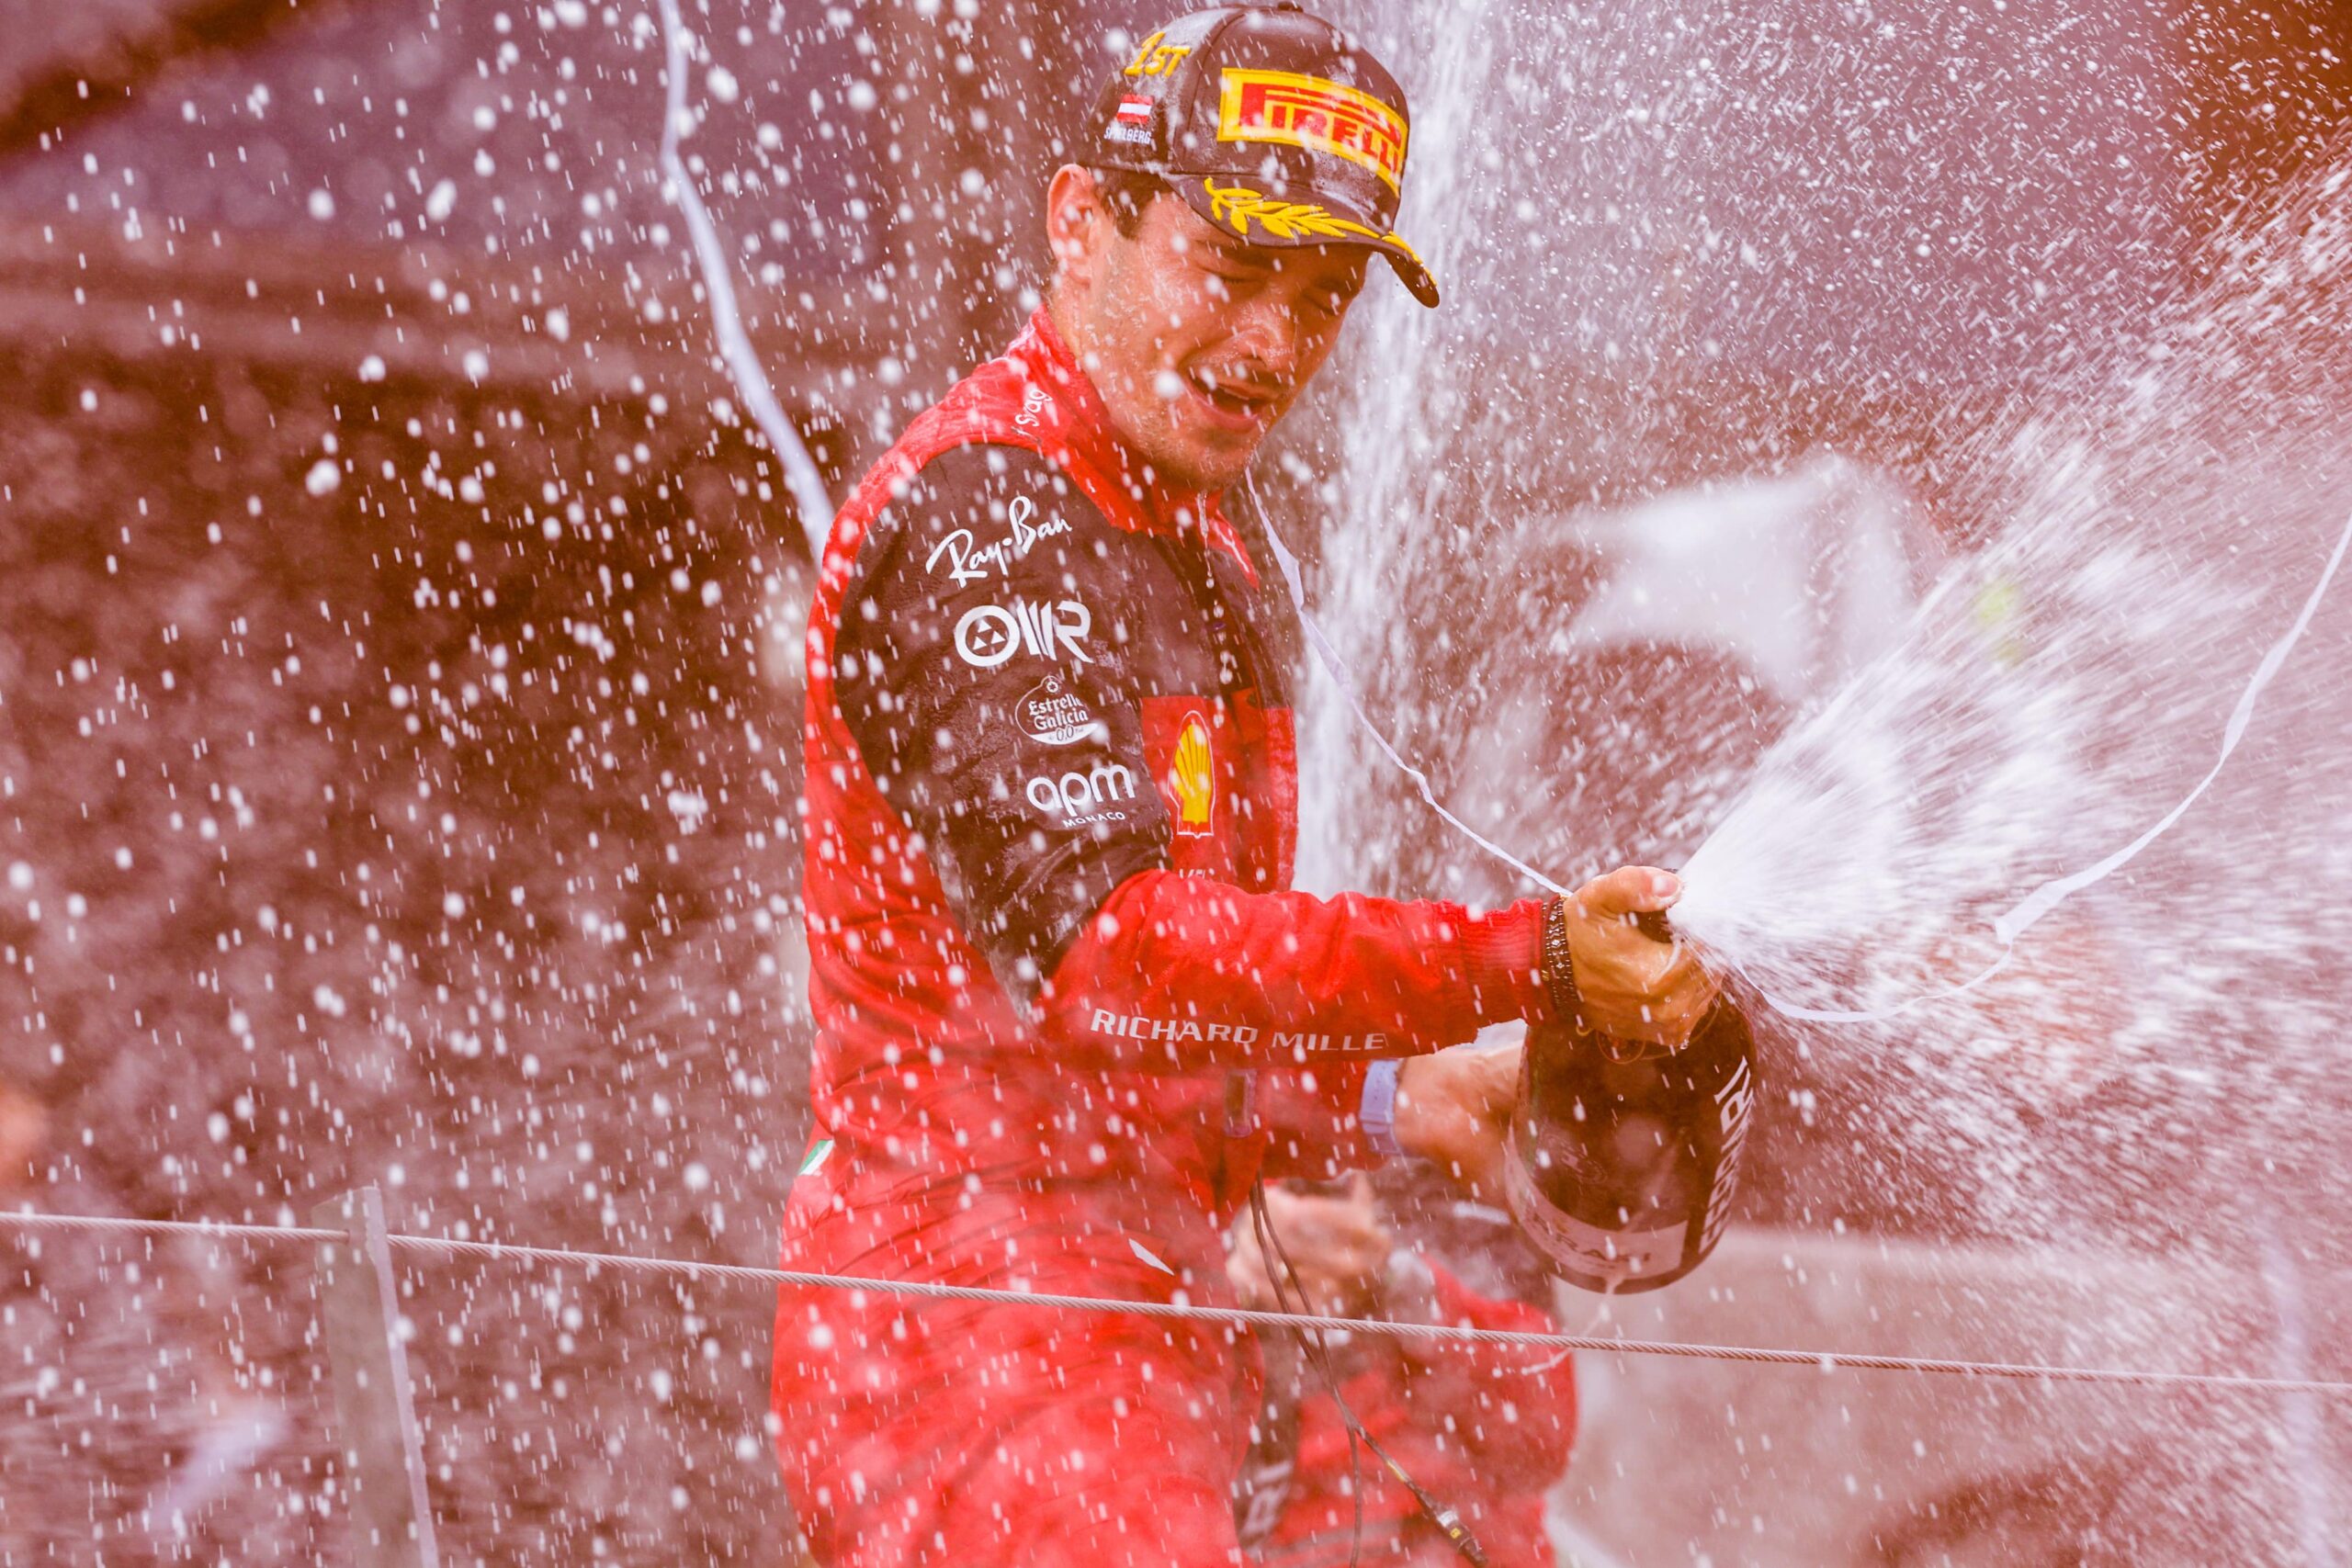 Charles Leclerc wins the 2022 Austrian GP